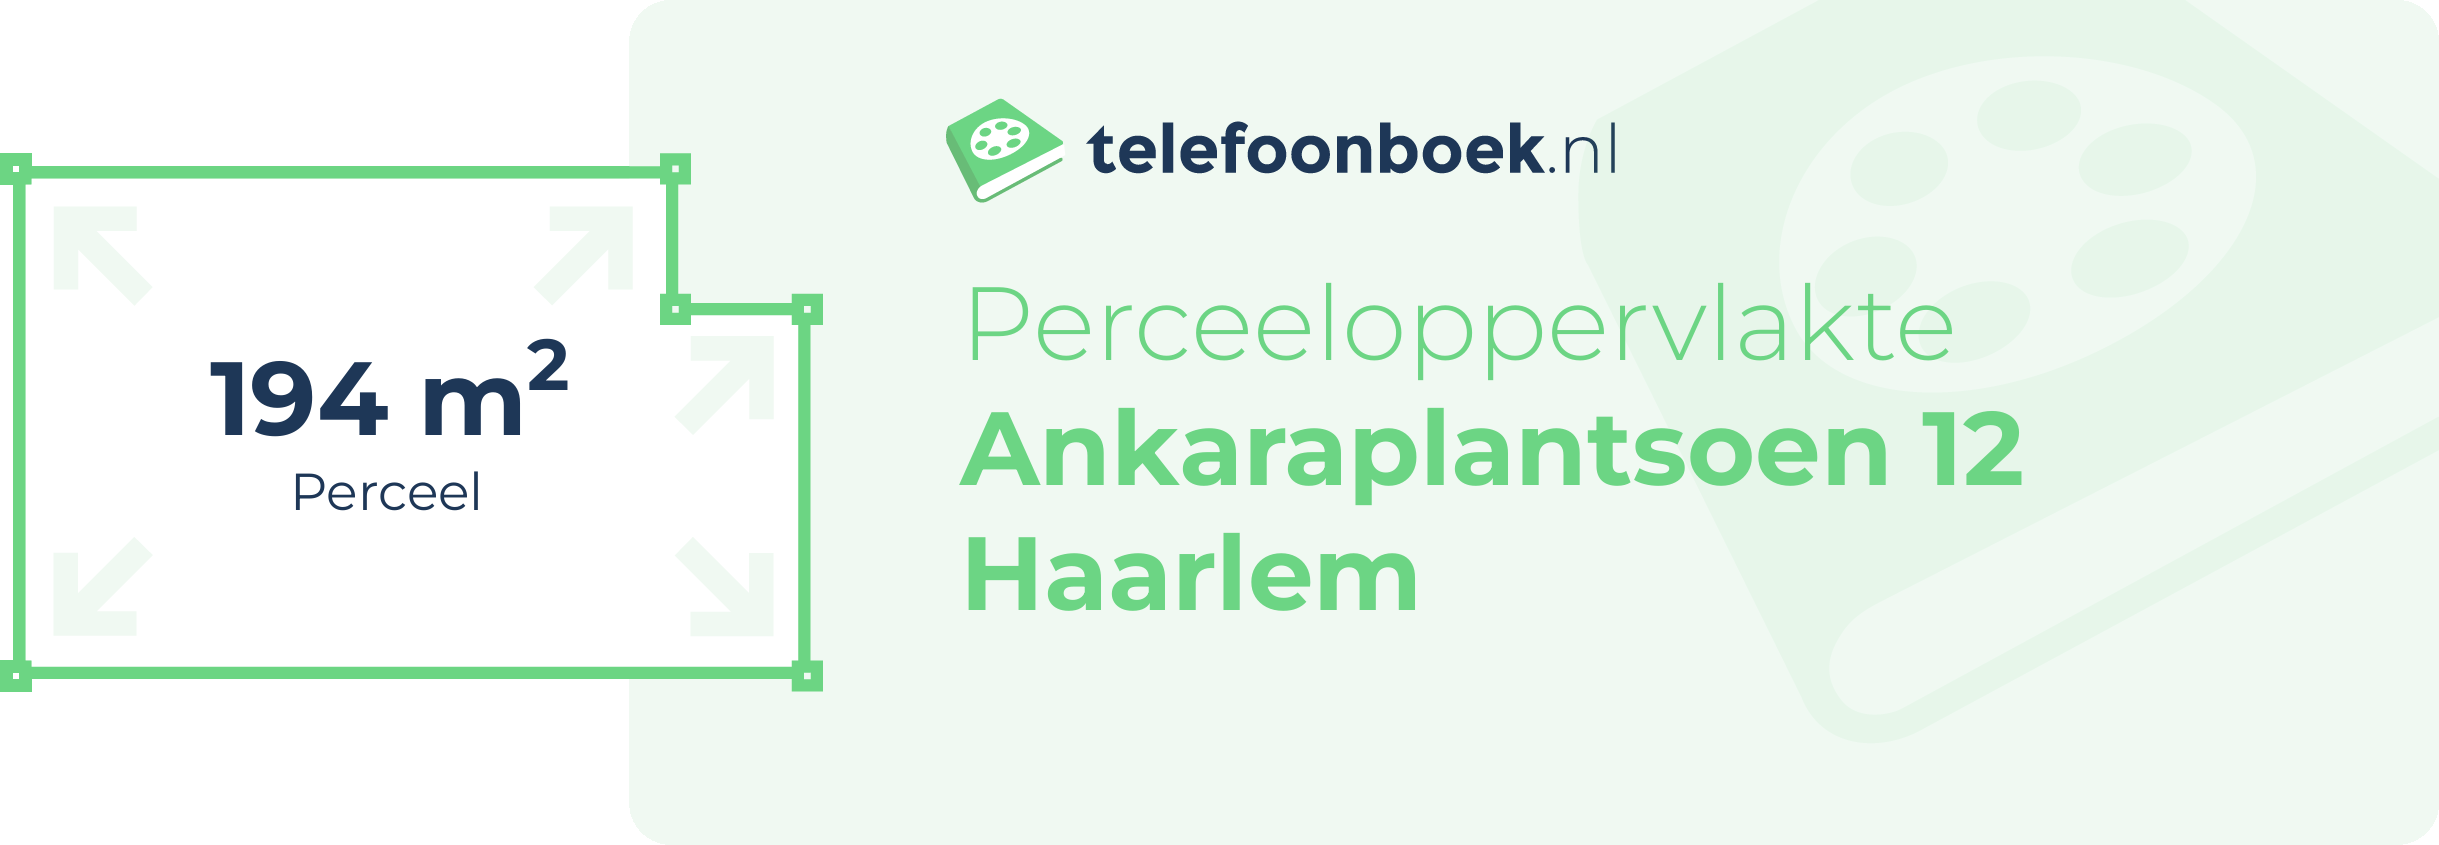 Perceeloppervlakte Ankaraplantsoen 12 Haarlem